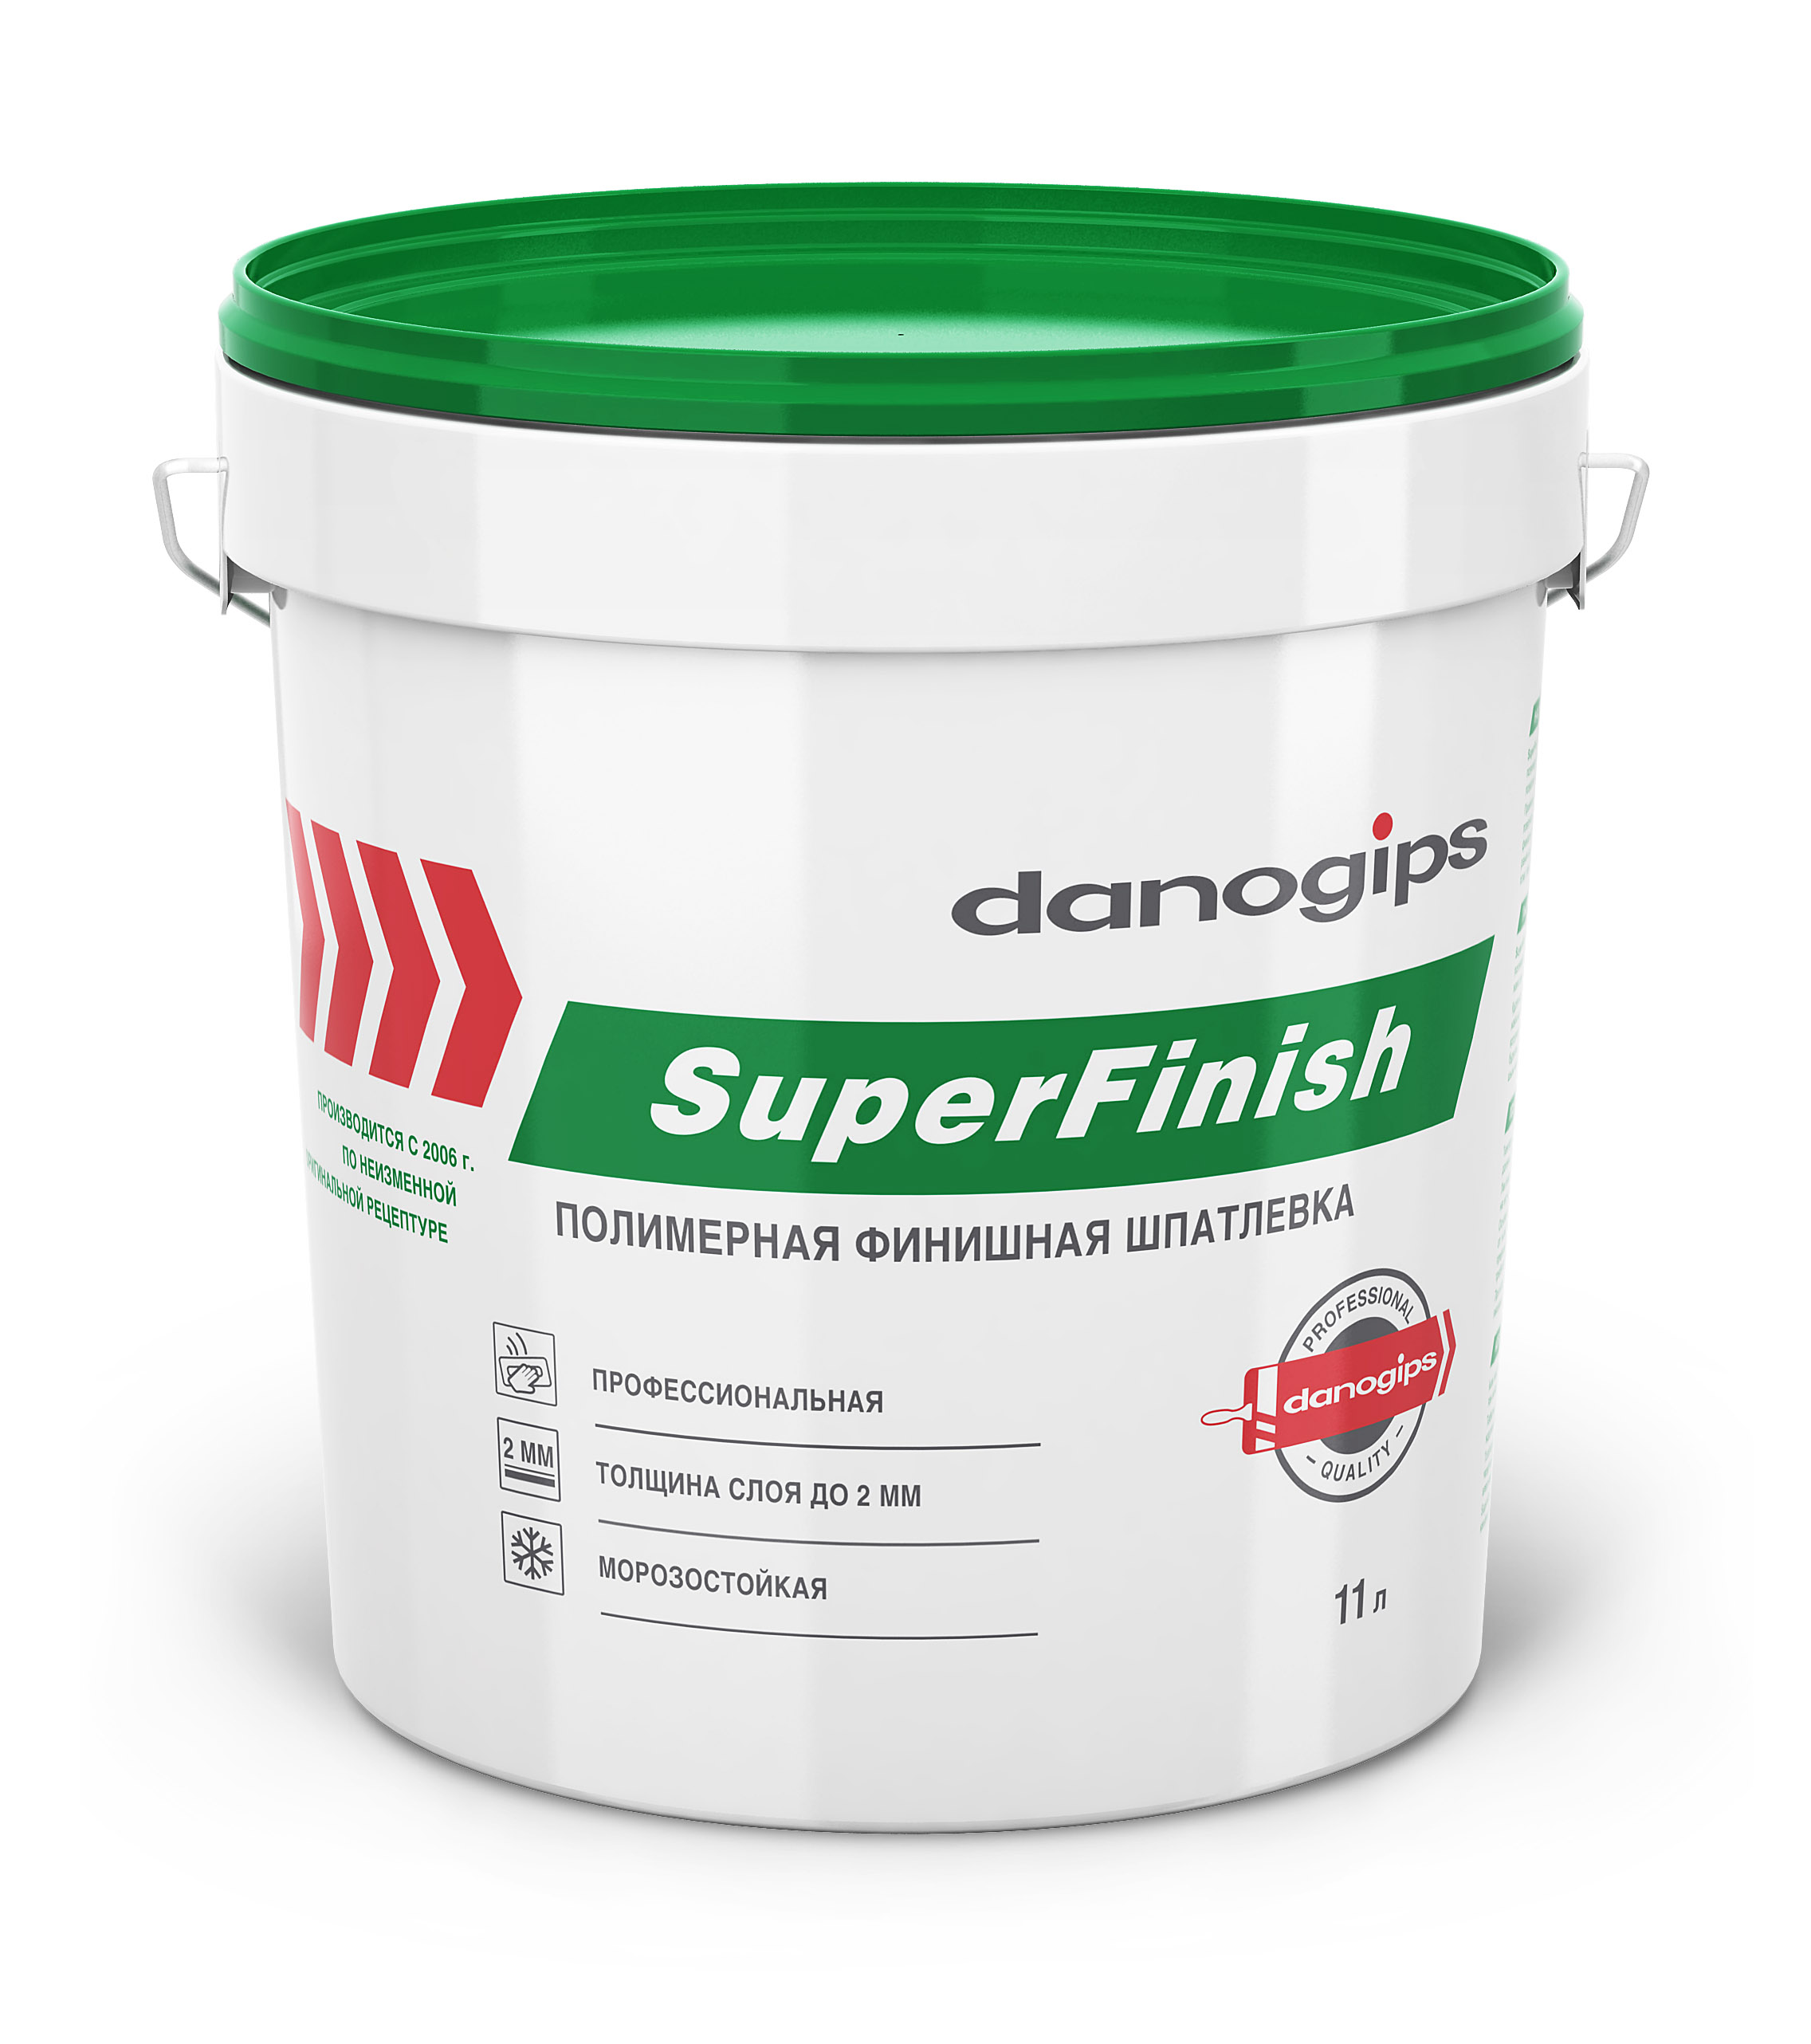 Шпатлевка SuperFinish (Sheetrock) готовая, финишная, 18кг, 11л, зеленая крышка, DANOGIPS